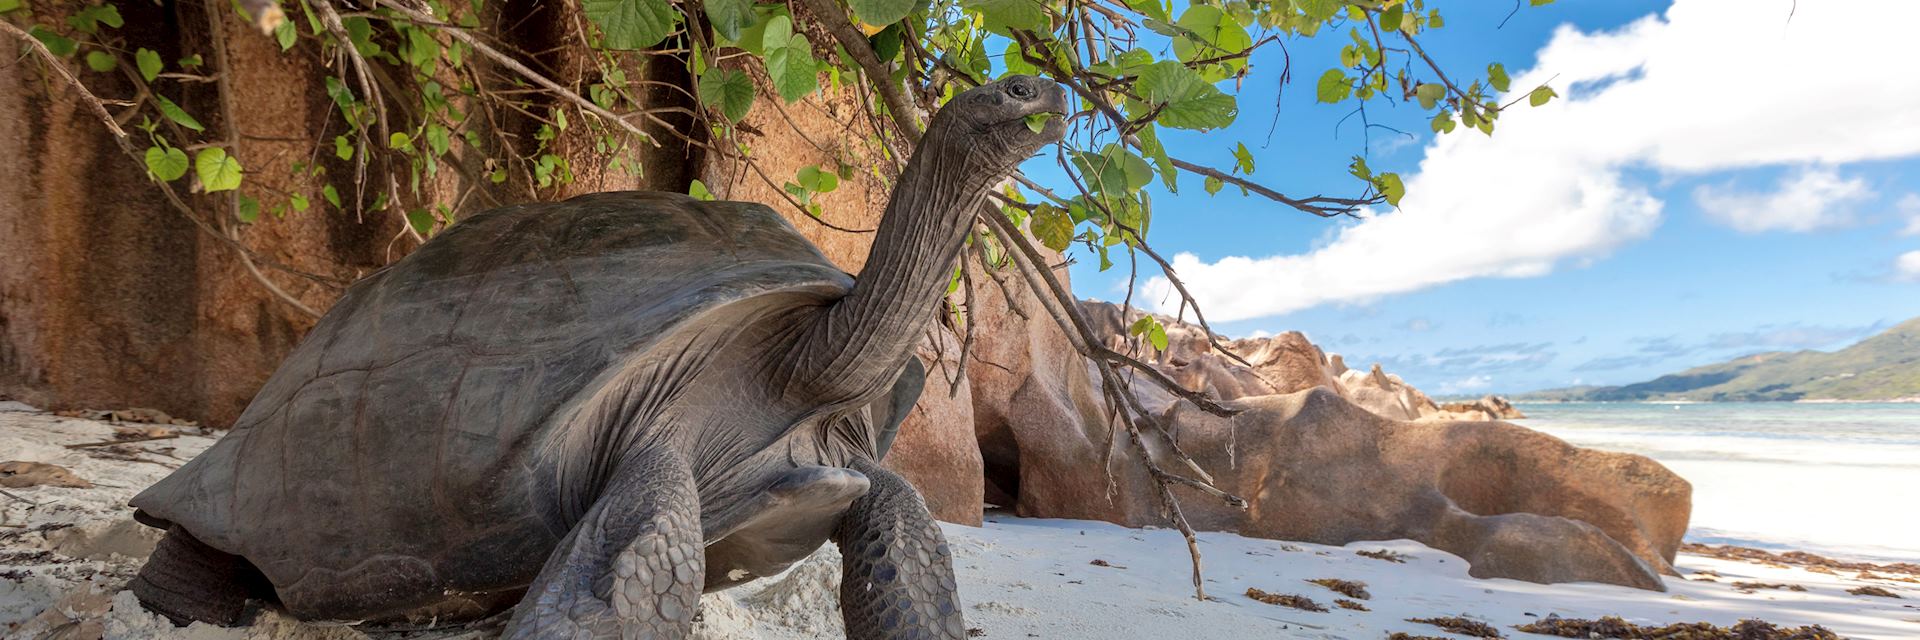 Aldabra tortoise, La Digue